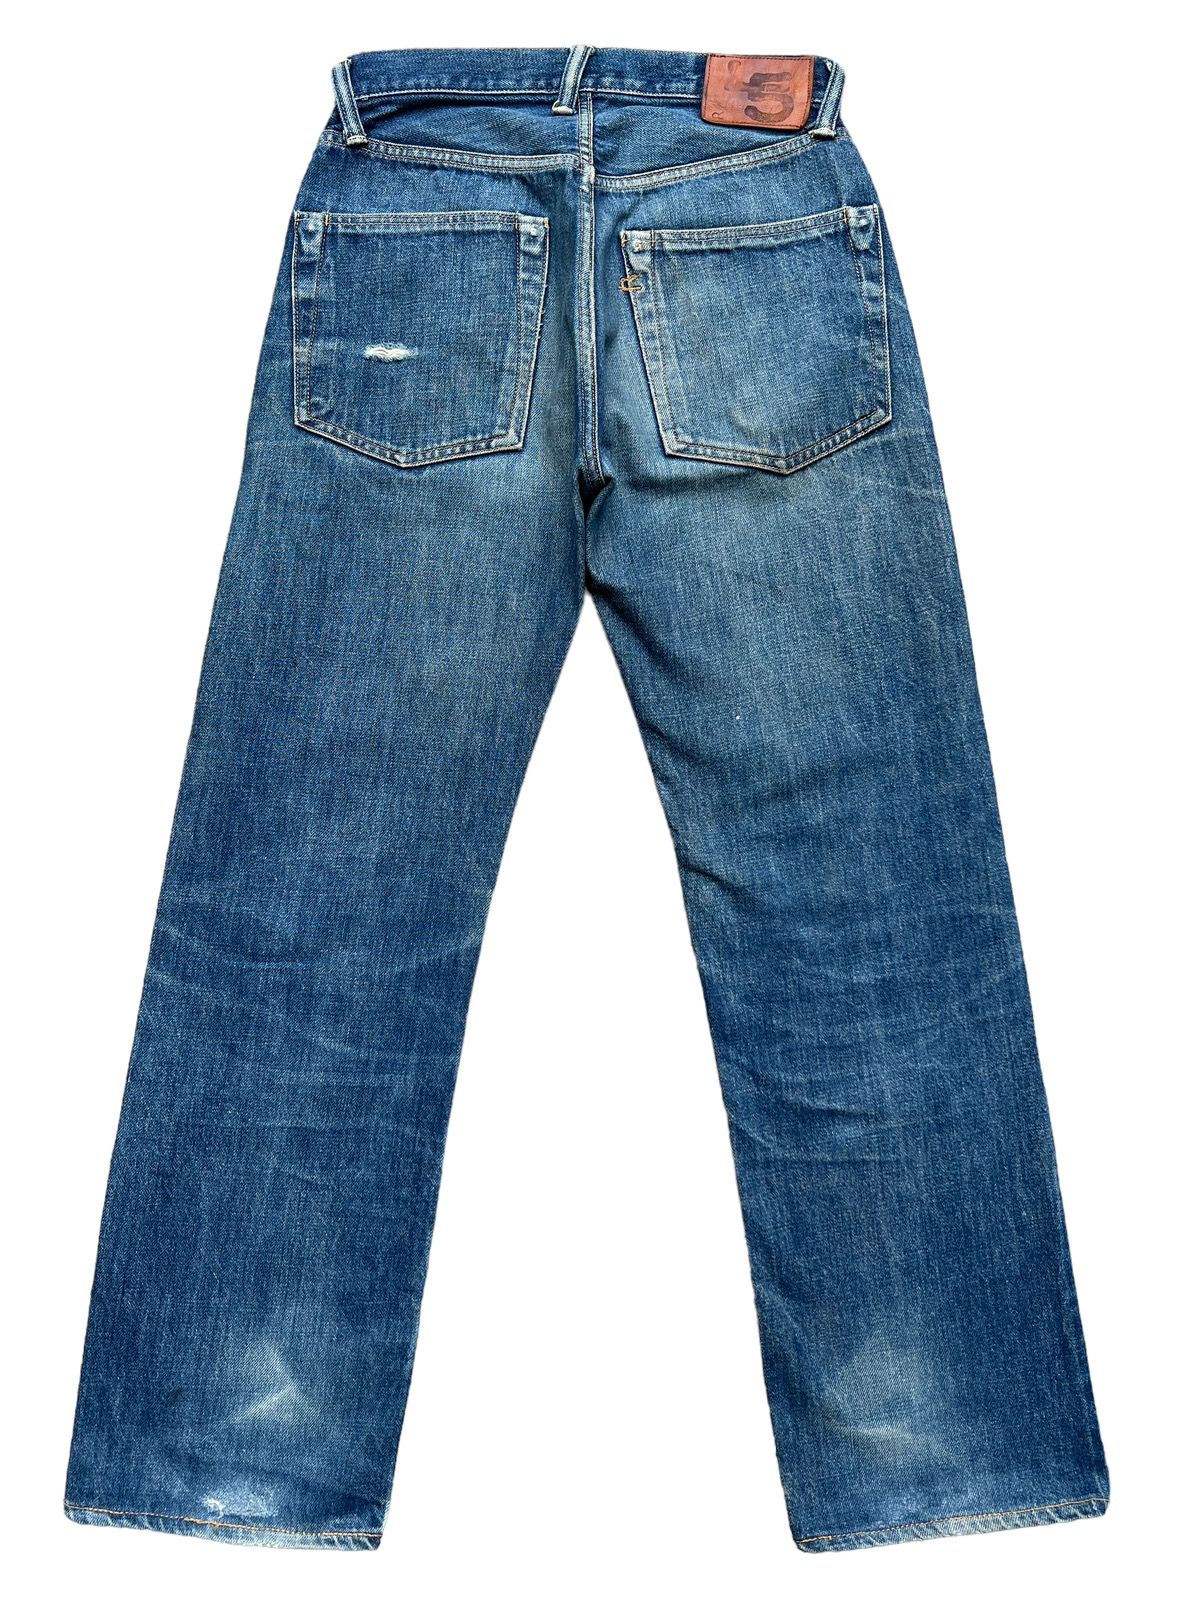 Vintage 45Rpm Selvedge Faded Distressed Denim Jeans 29x29 - 3